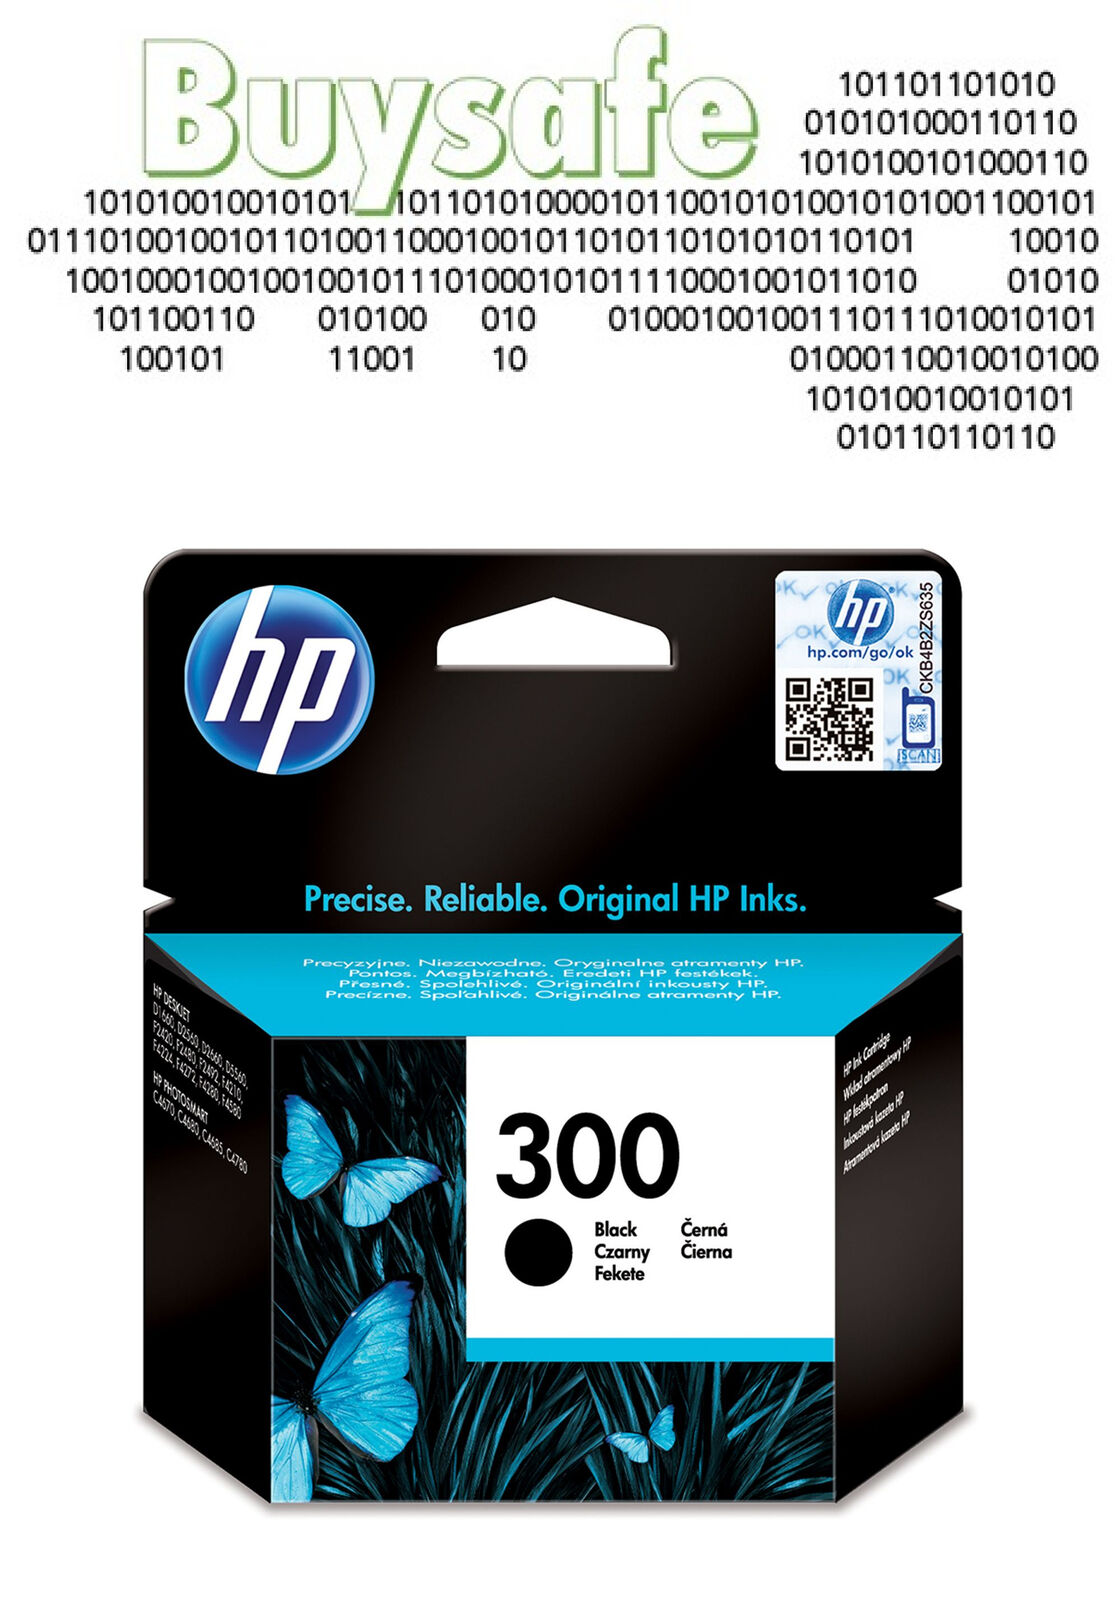 HP 300 black ink cartridge for HP Photosmart C4680 printer